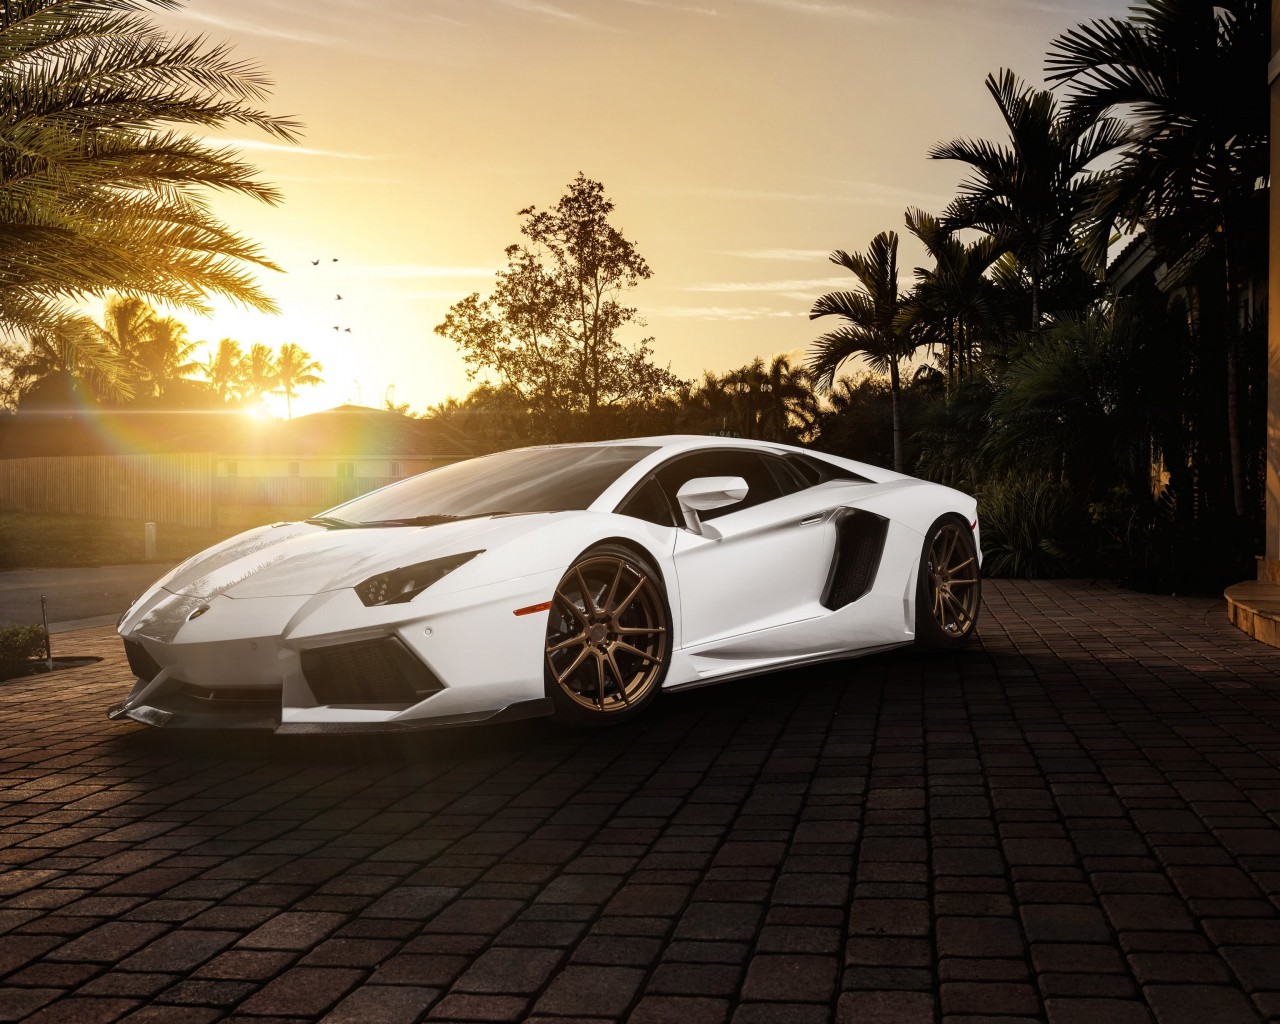 Lamborghini Aventador LP700-4 in White Wallpaper for Desktop 1280x1024